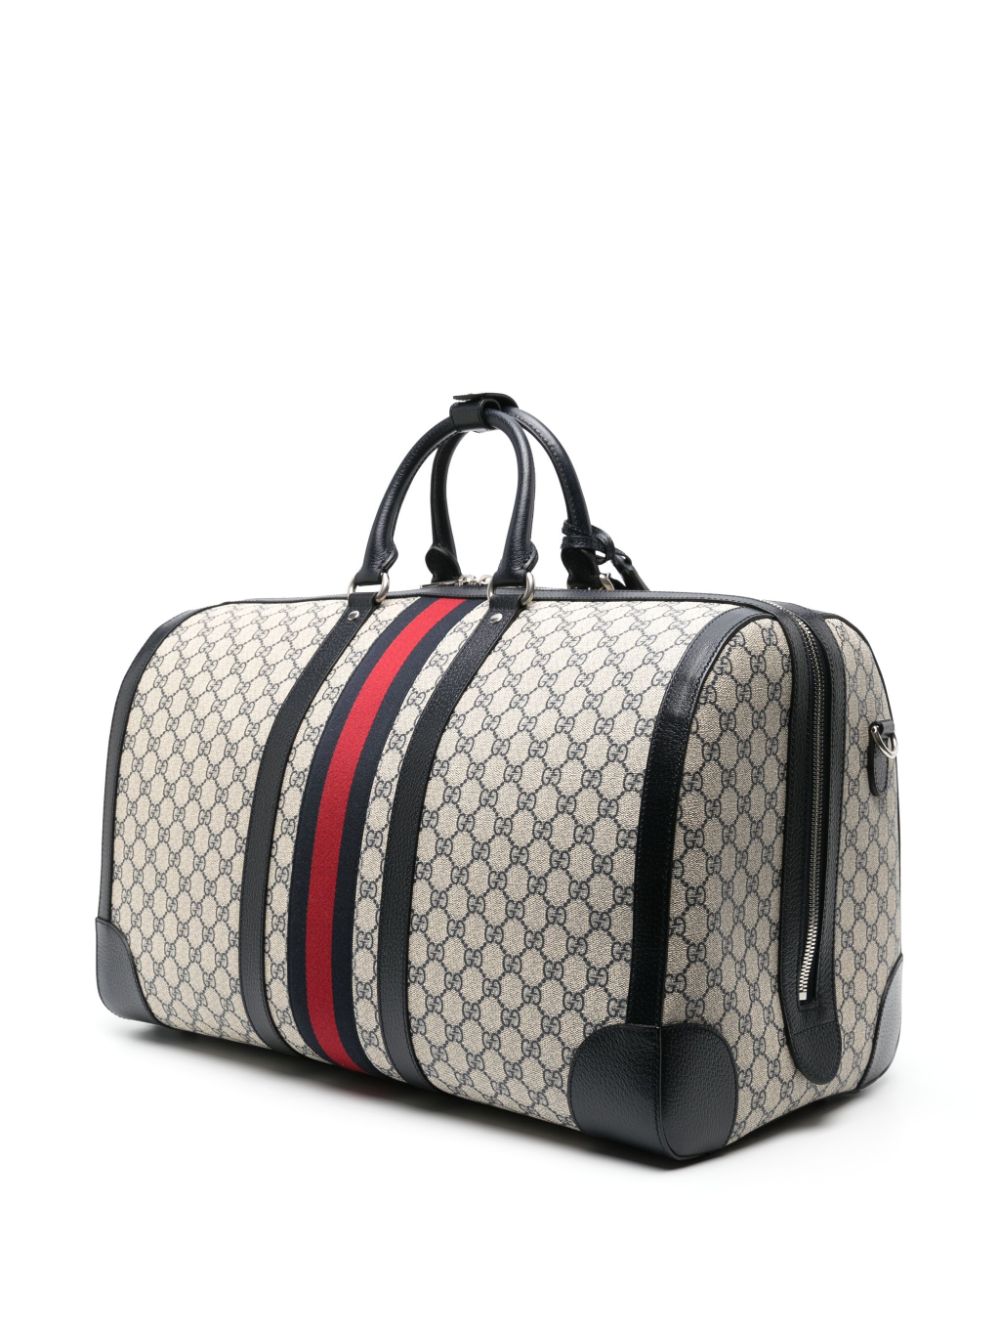 Image 2 of Gucci large Savoy duffle bag